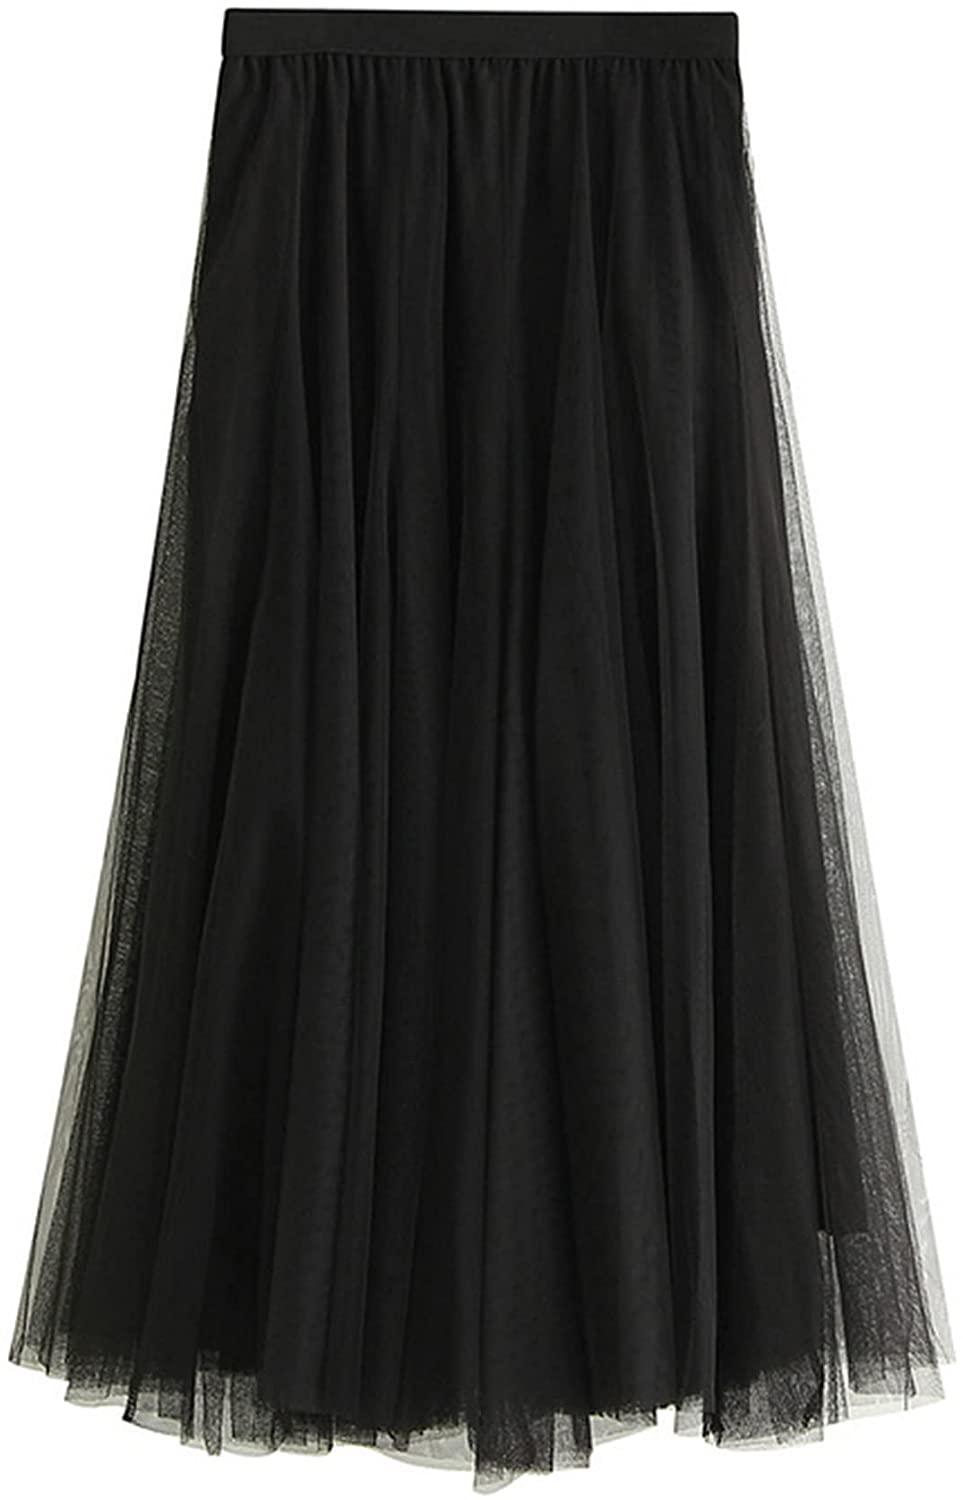 Dirholl Women's A-Line Fairy Elastic Waist Tulle Midi Skirt 